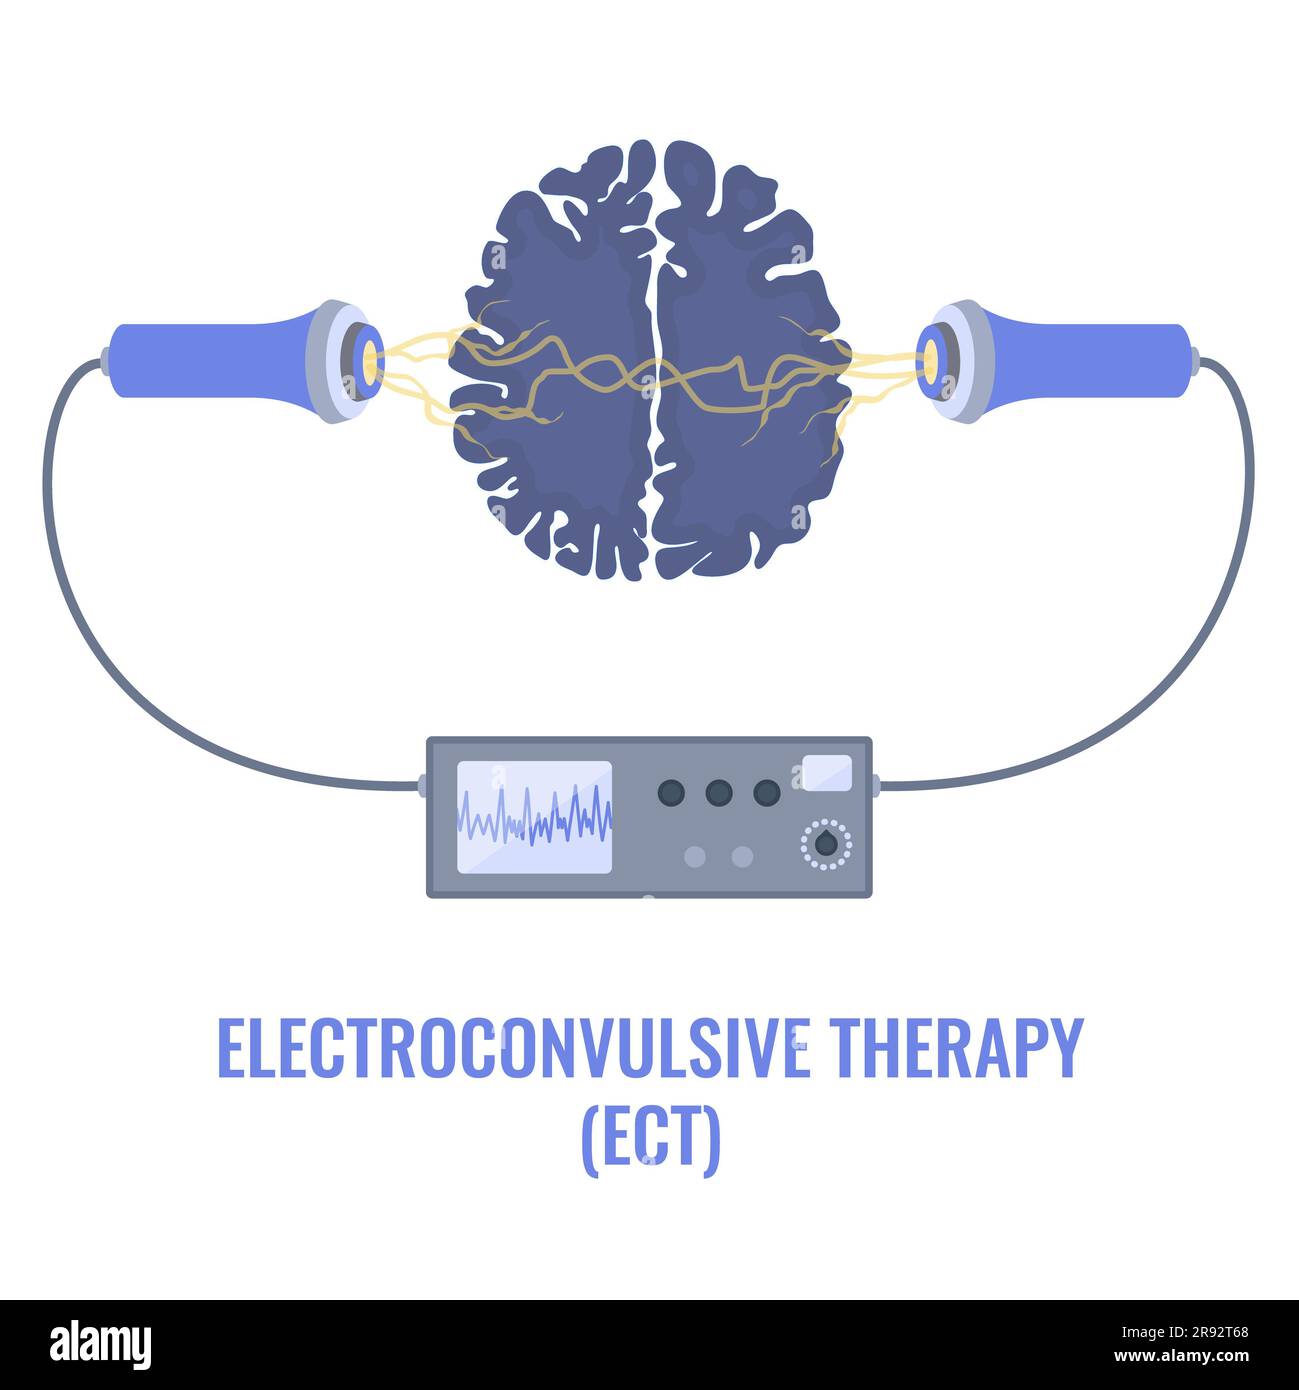 https://c8.alamy.com/comp/2R92T68/electroconvulsive-therapy-illustration-2R92T68.jpg